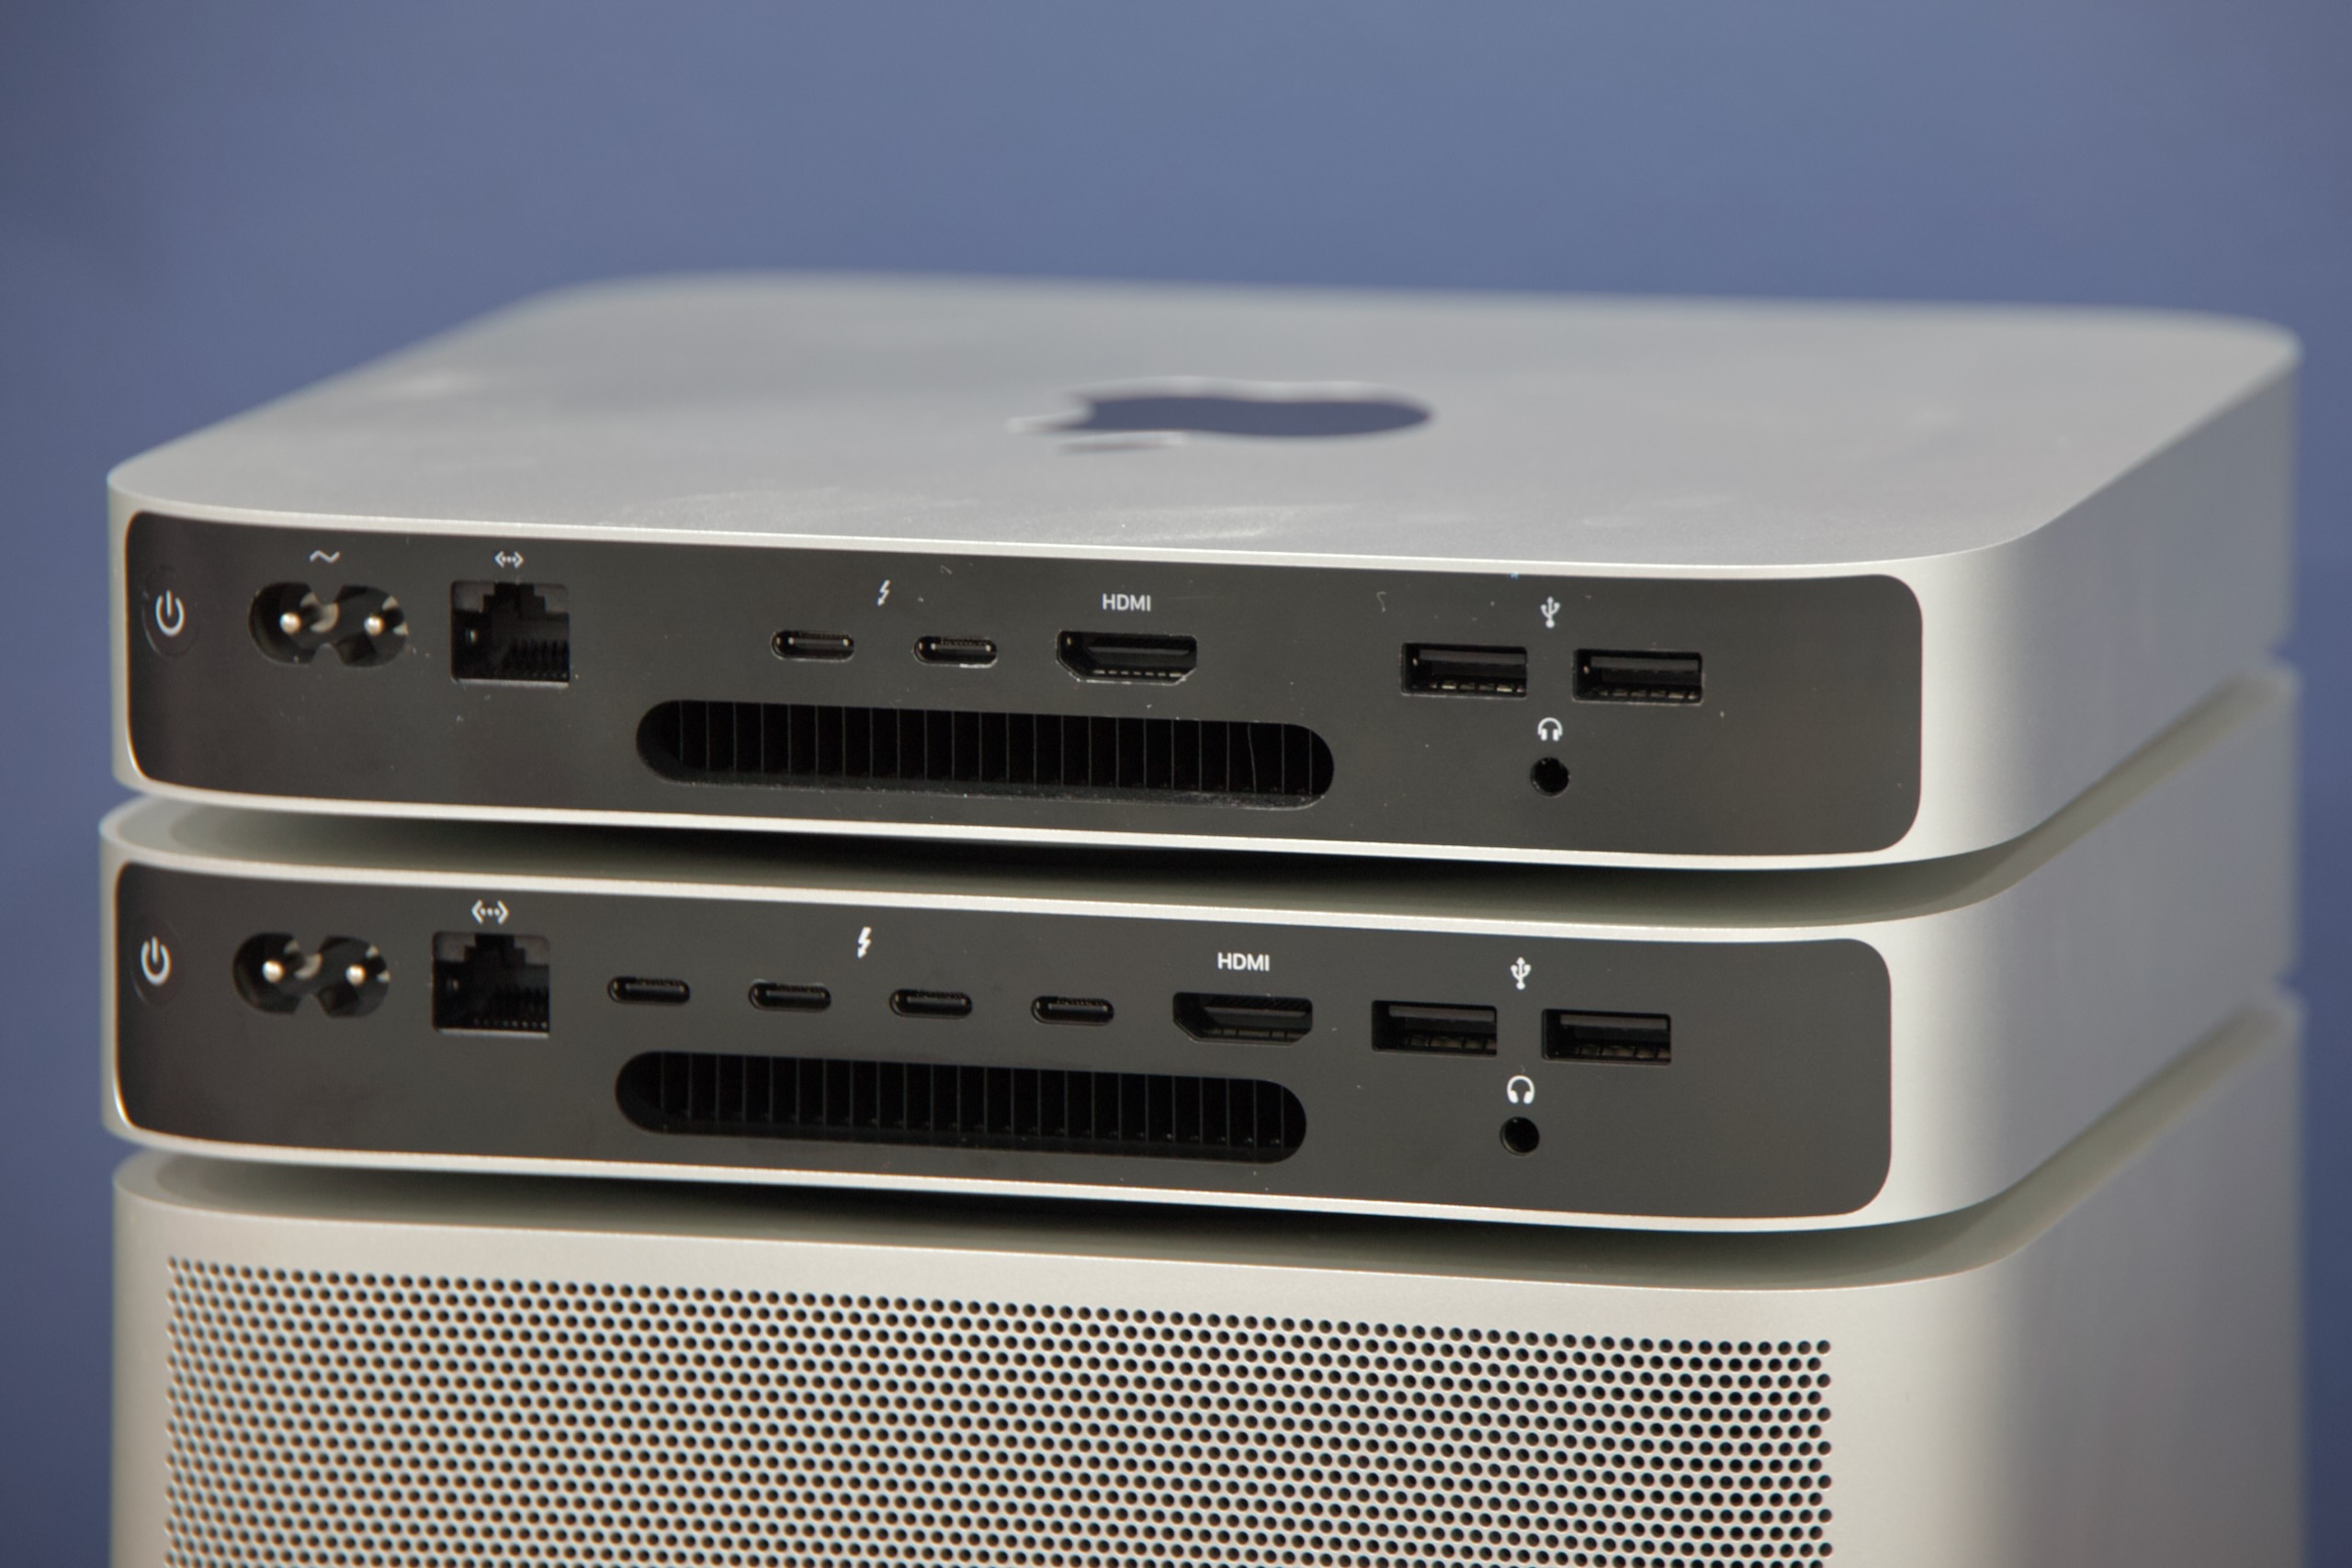 M2 Pro Mac mini review: Apple's Goldilocks desktop for semi